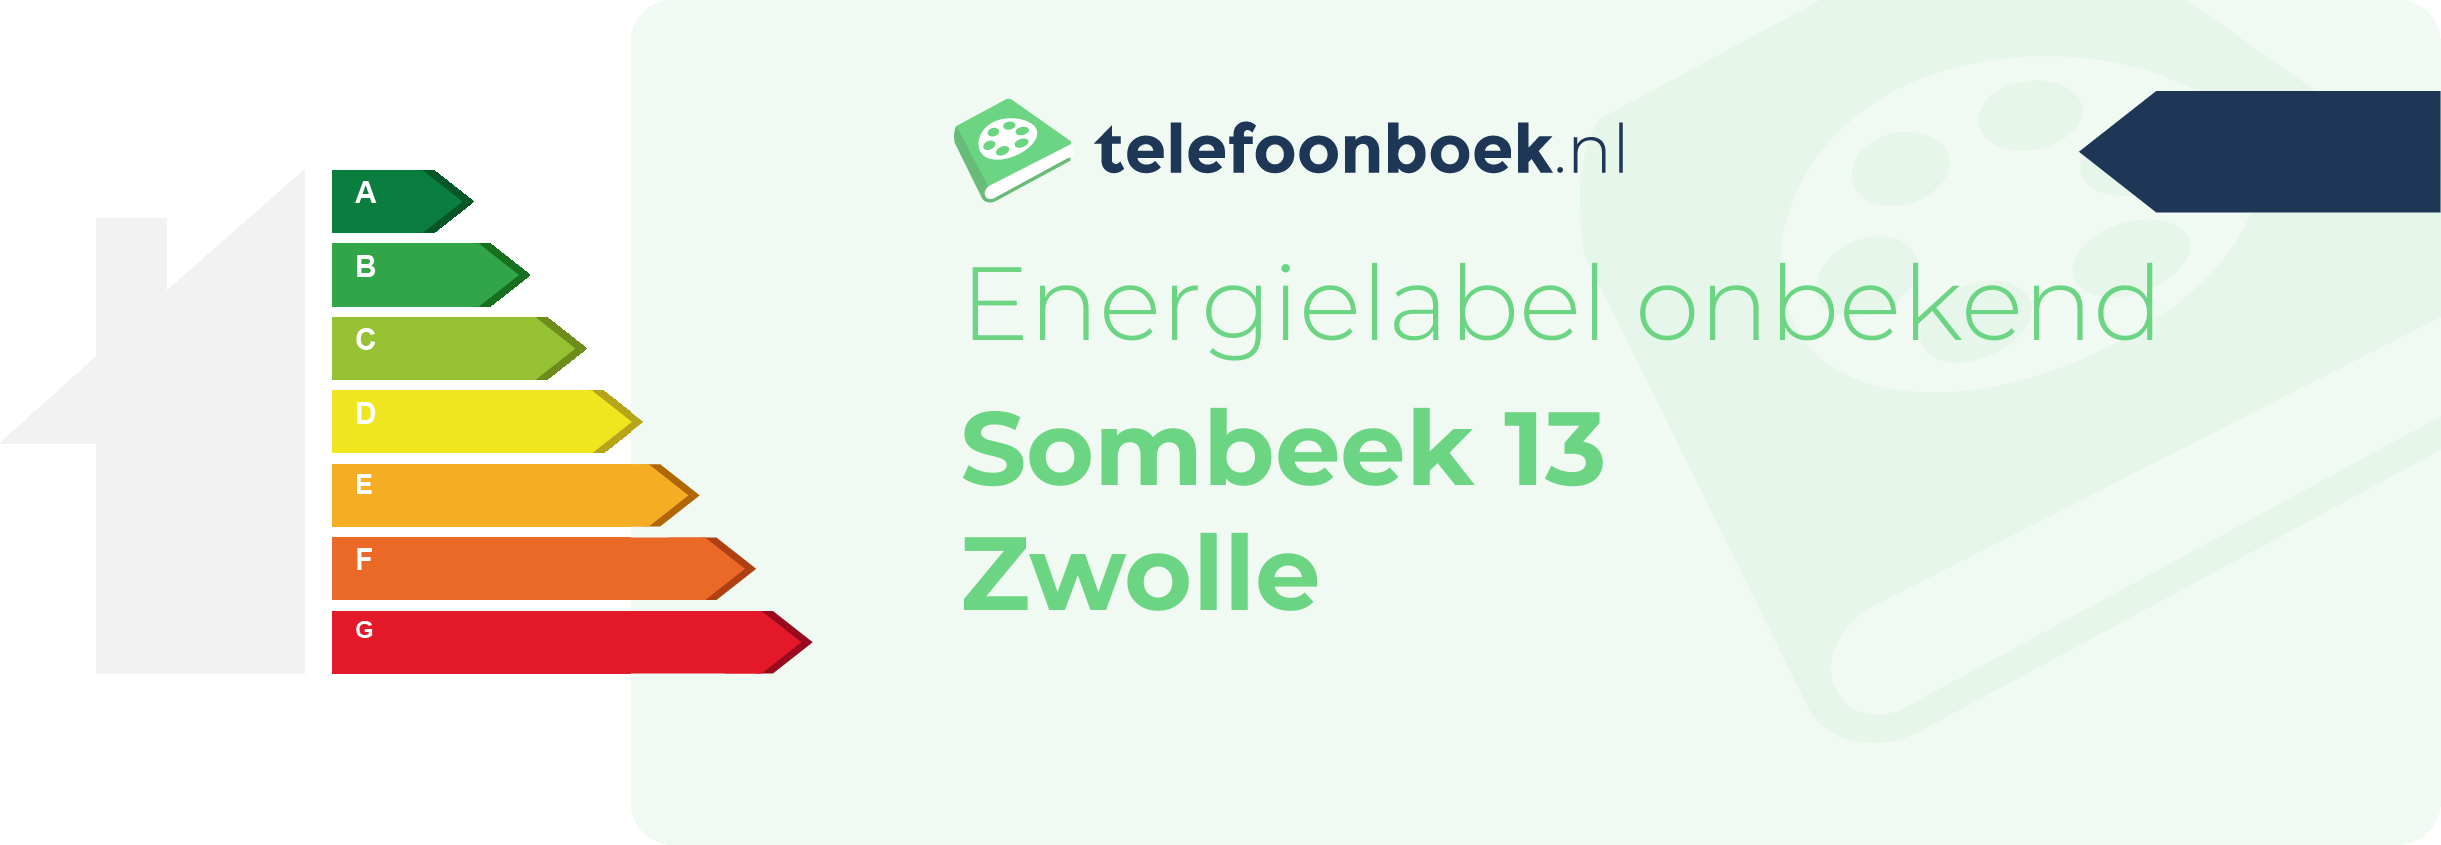 Energielabel Sombeek 13 Zwolle